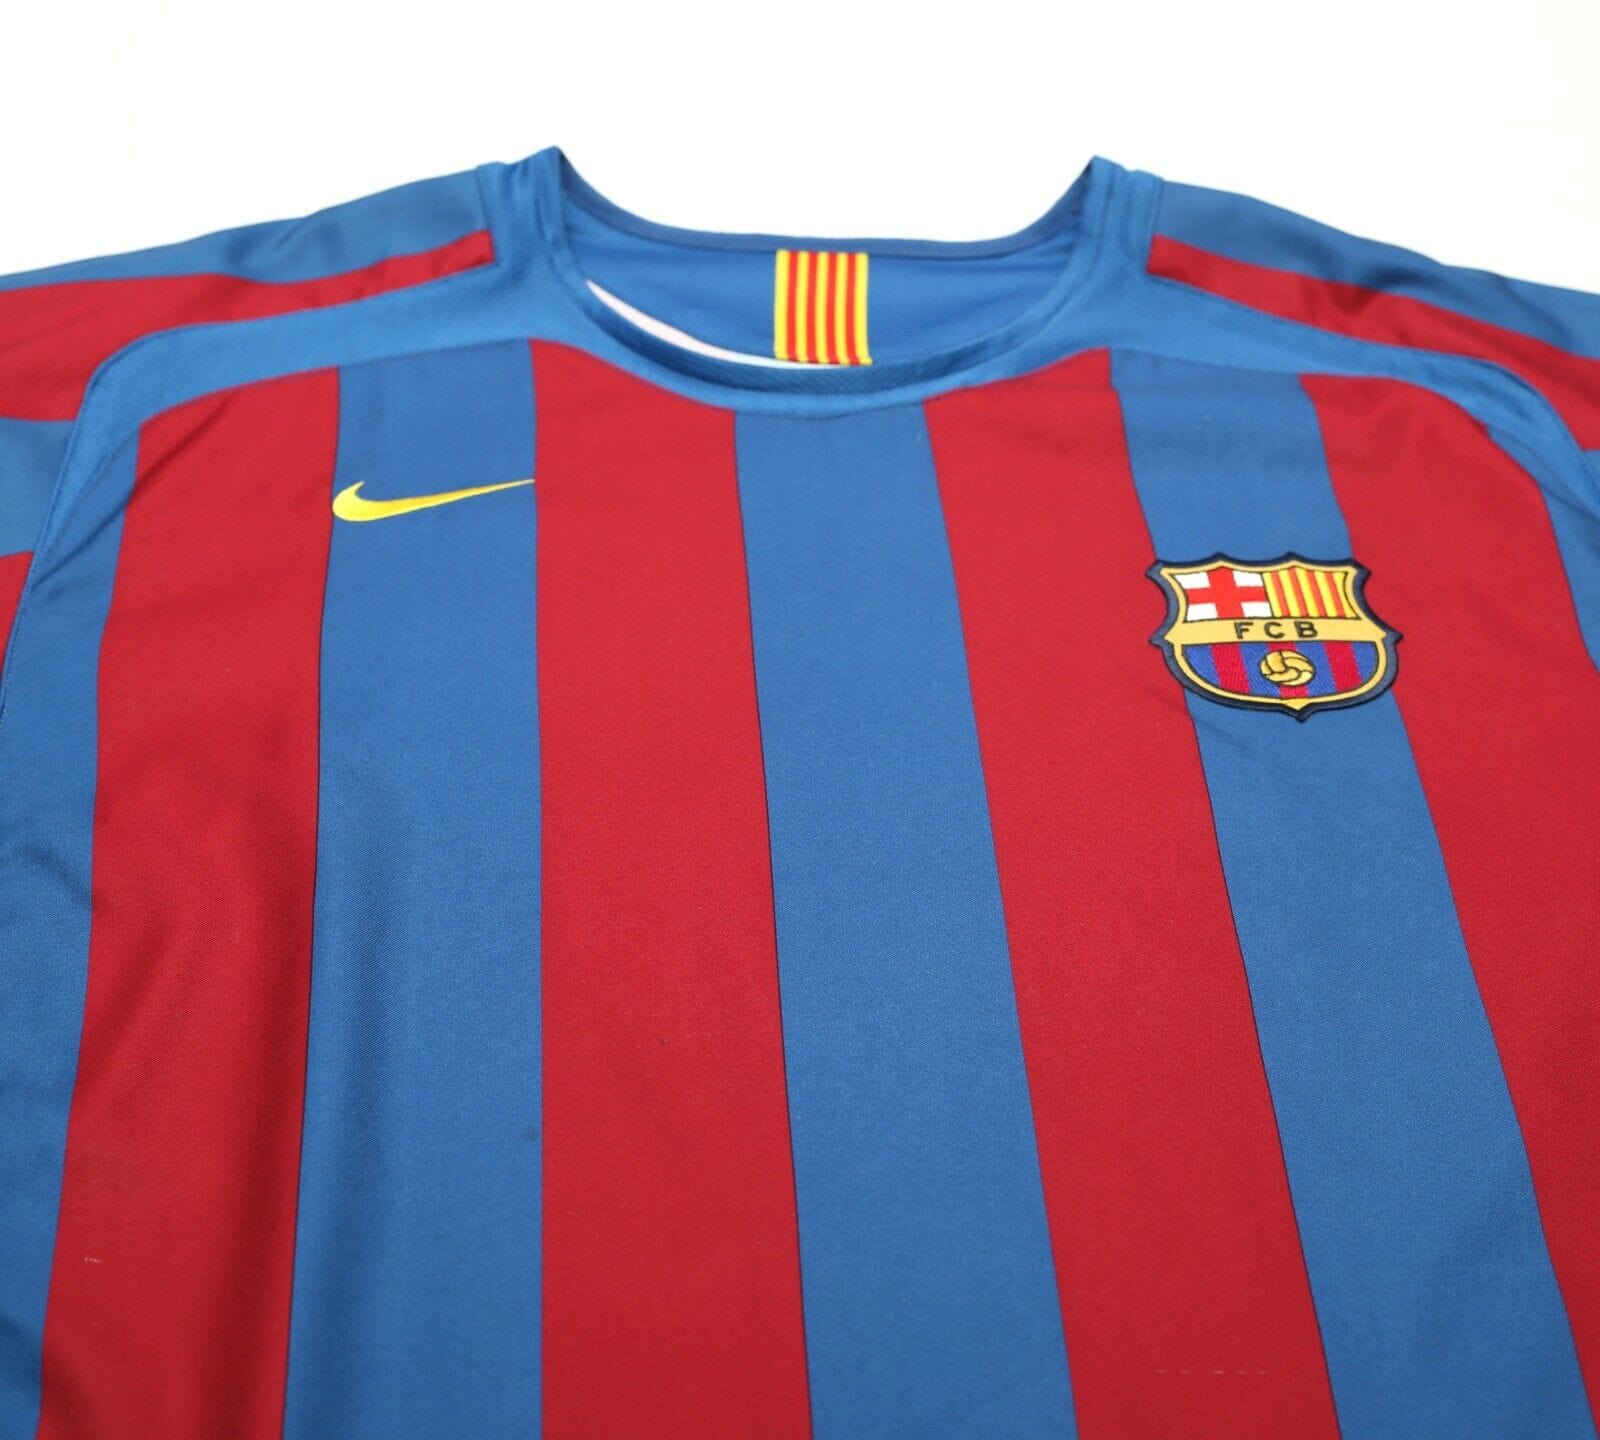 Retro Barcelona Home Jersey 2005/06 By Nike